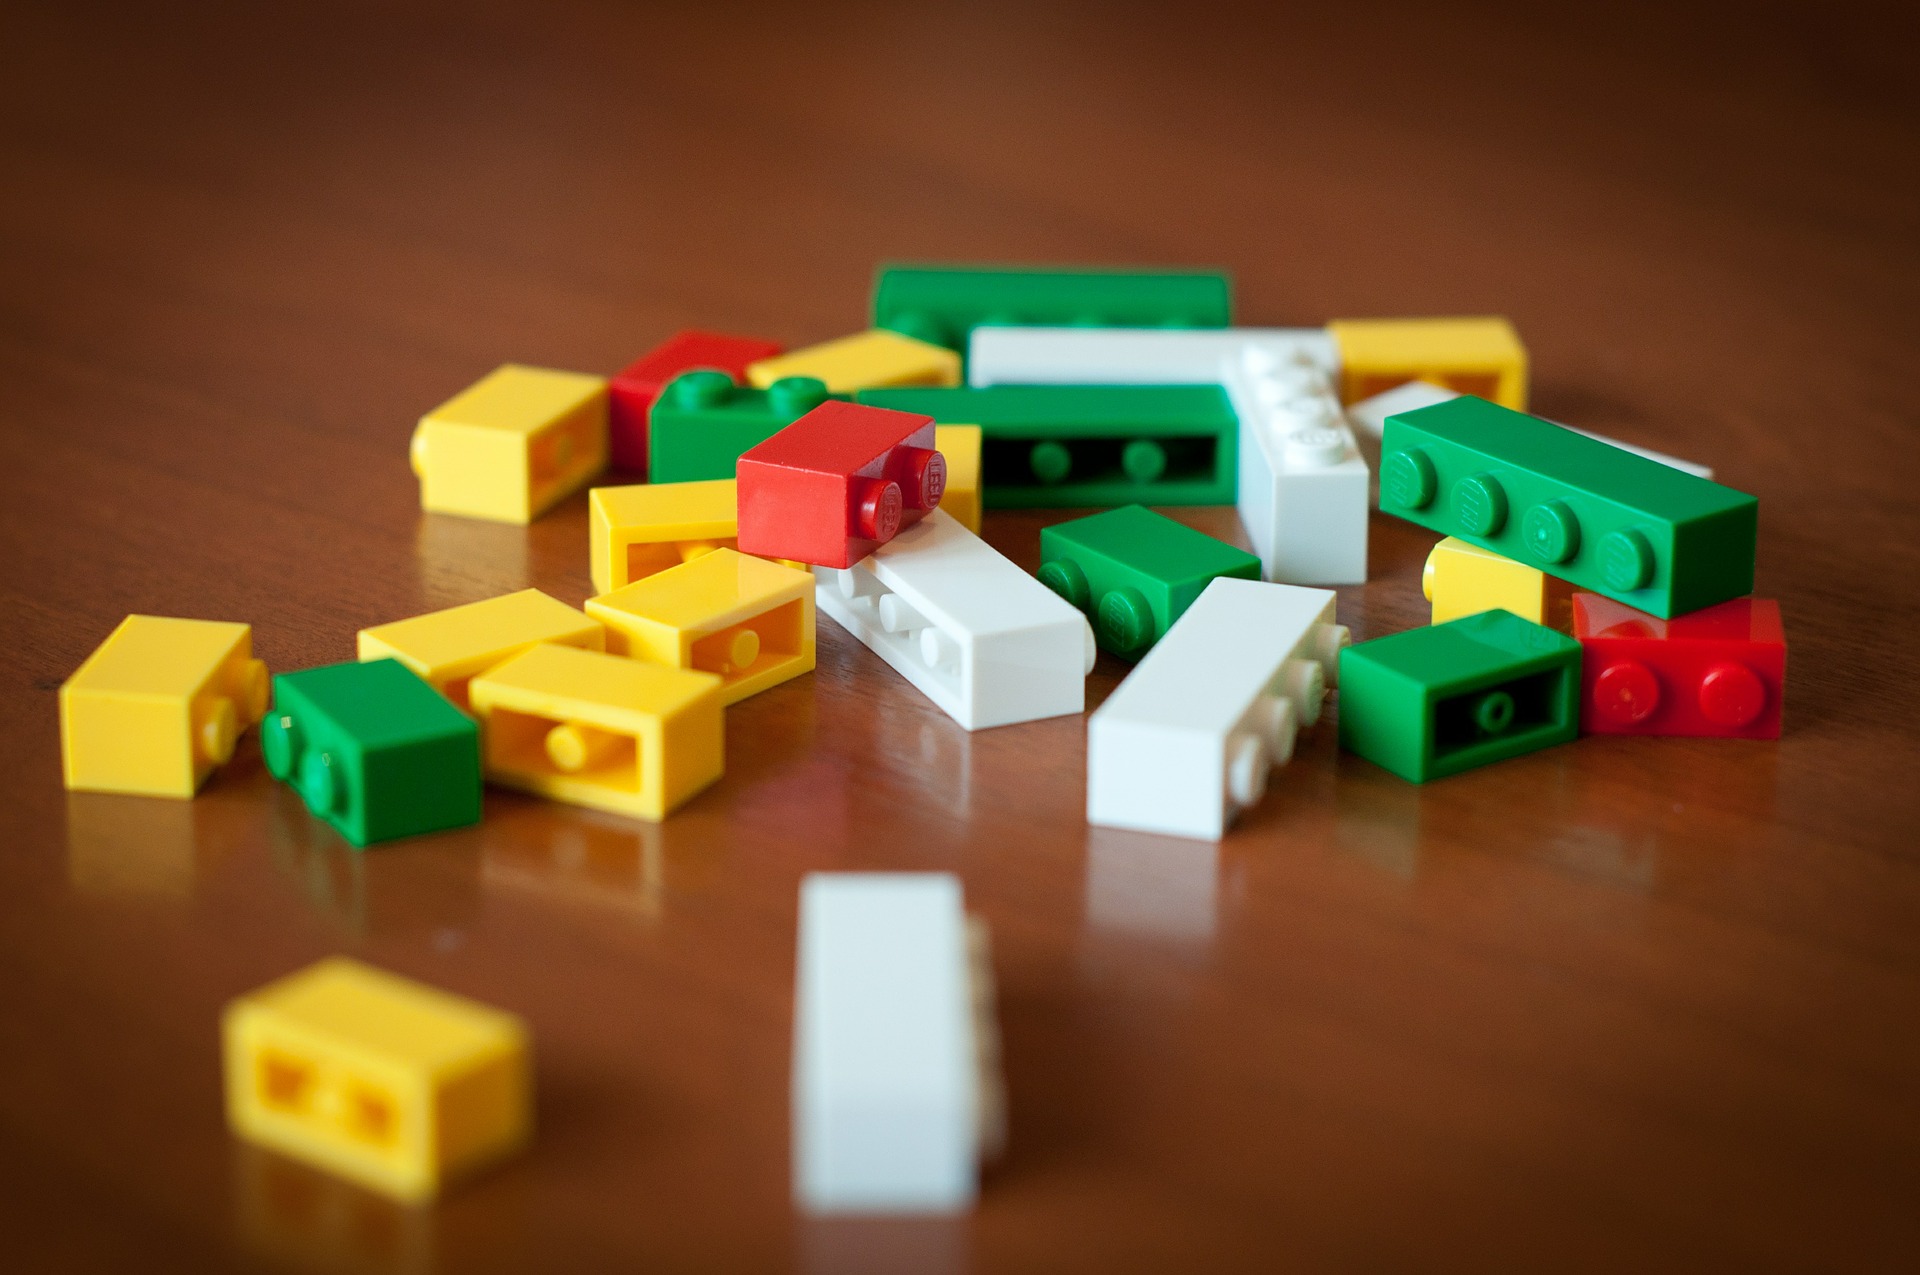 Lego pieces on the floor